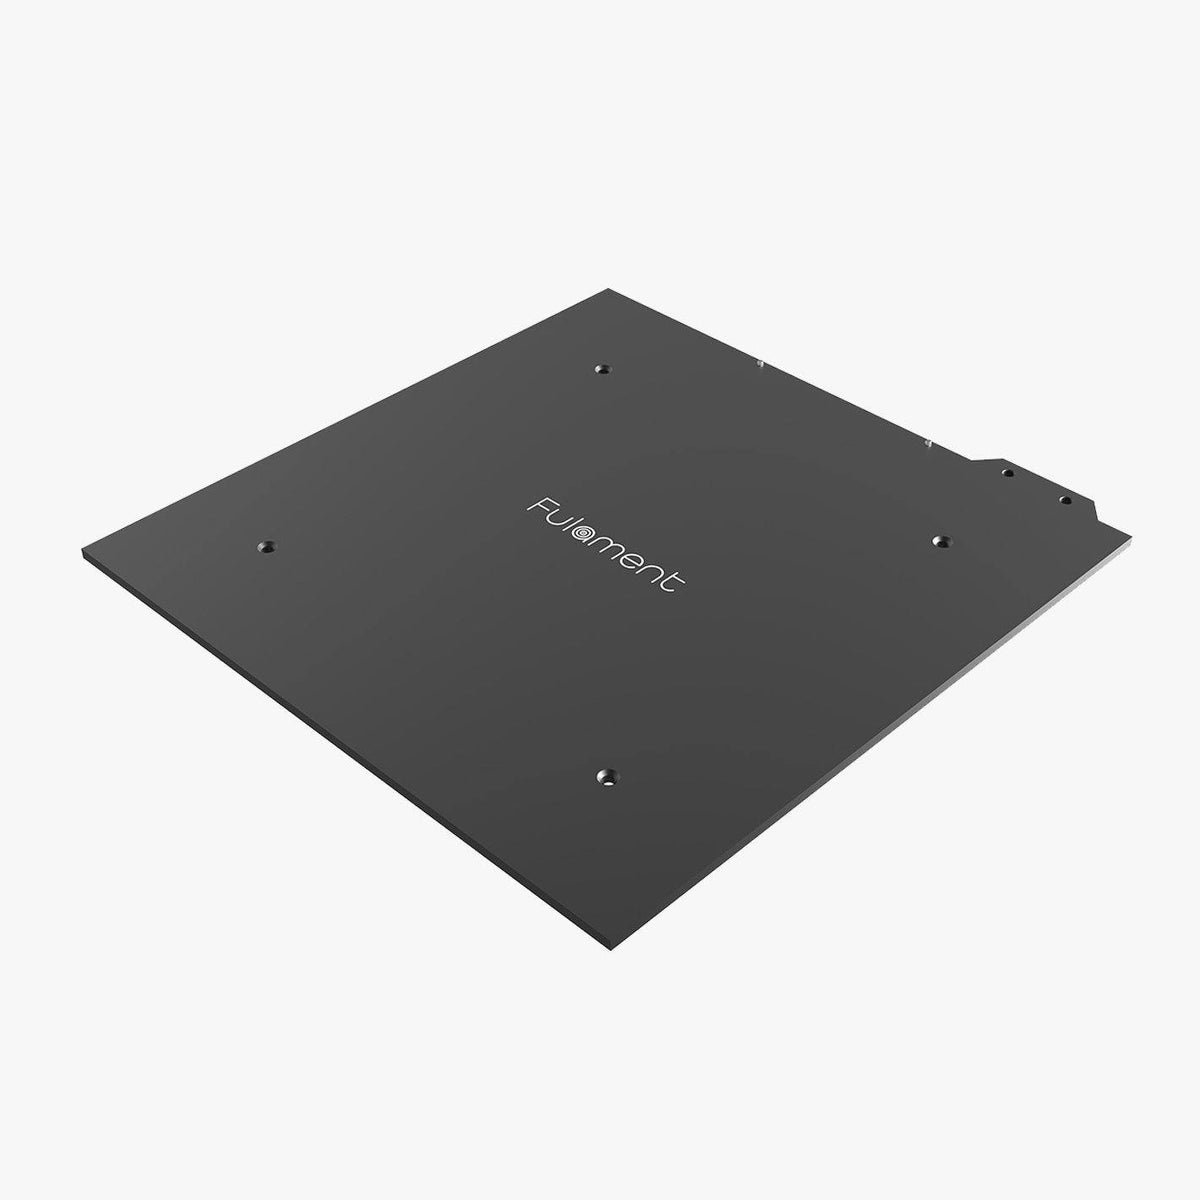 Sidewinder X1 Fula-Bed (Pre-Order) Build Plate Fulament